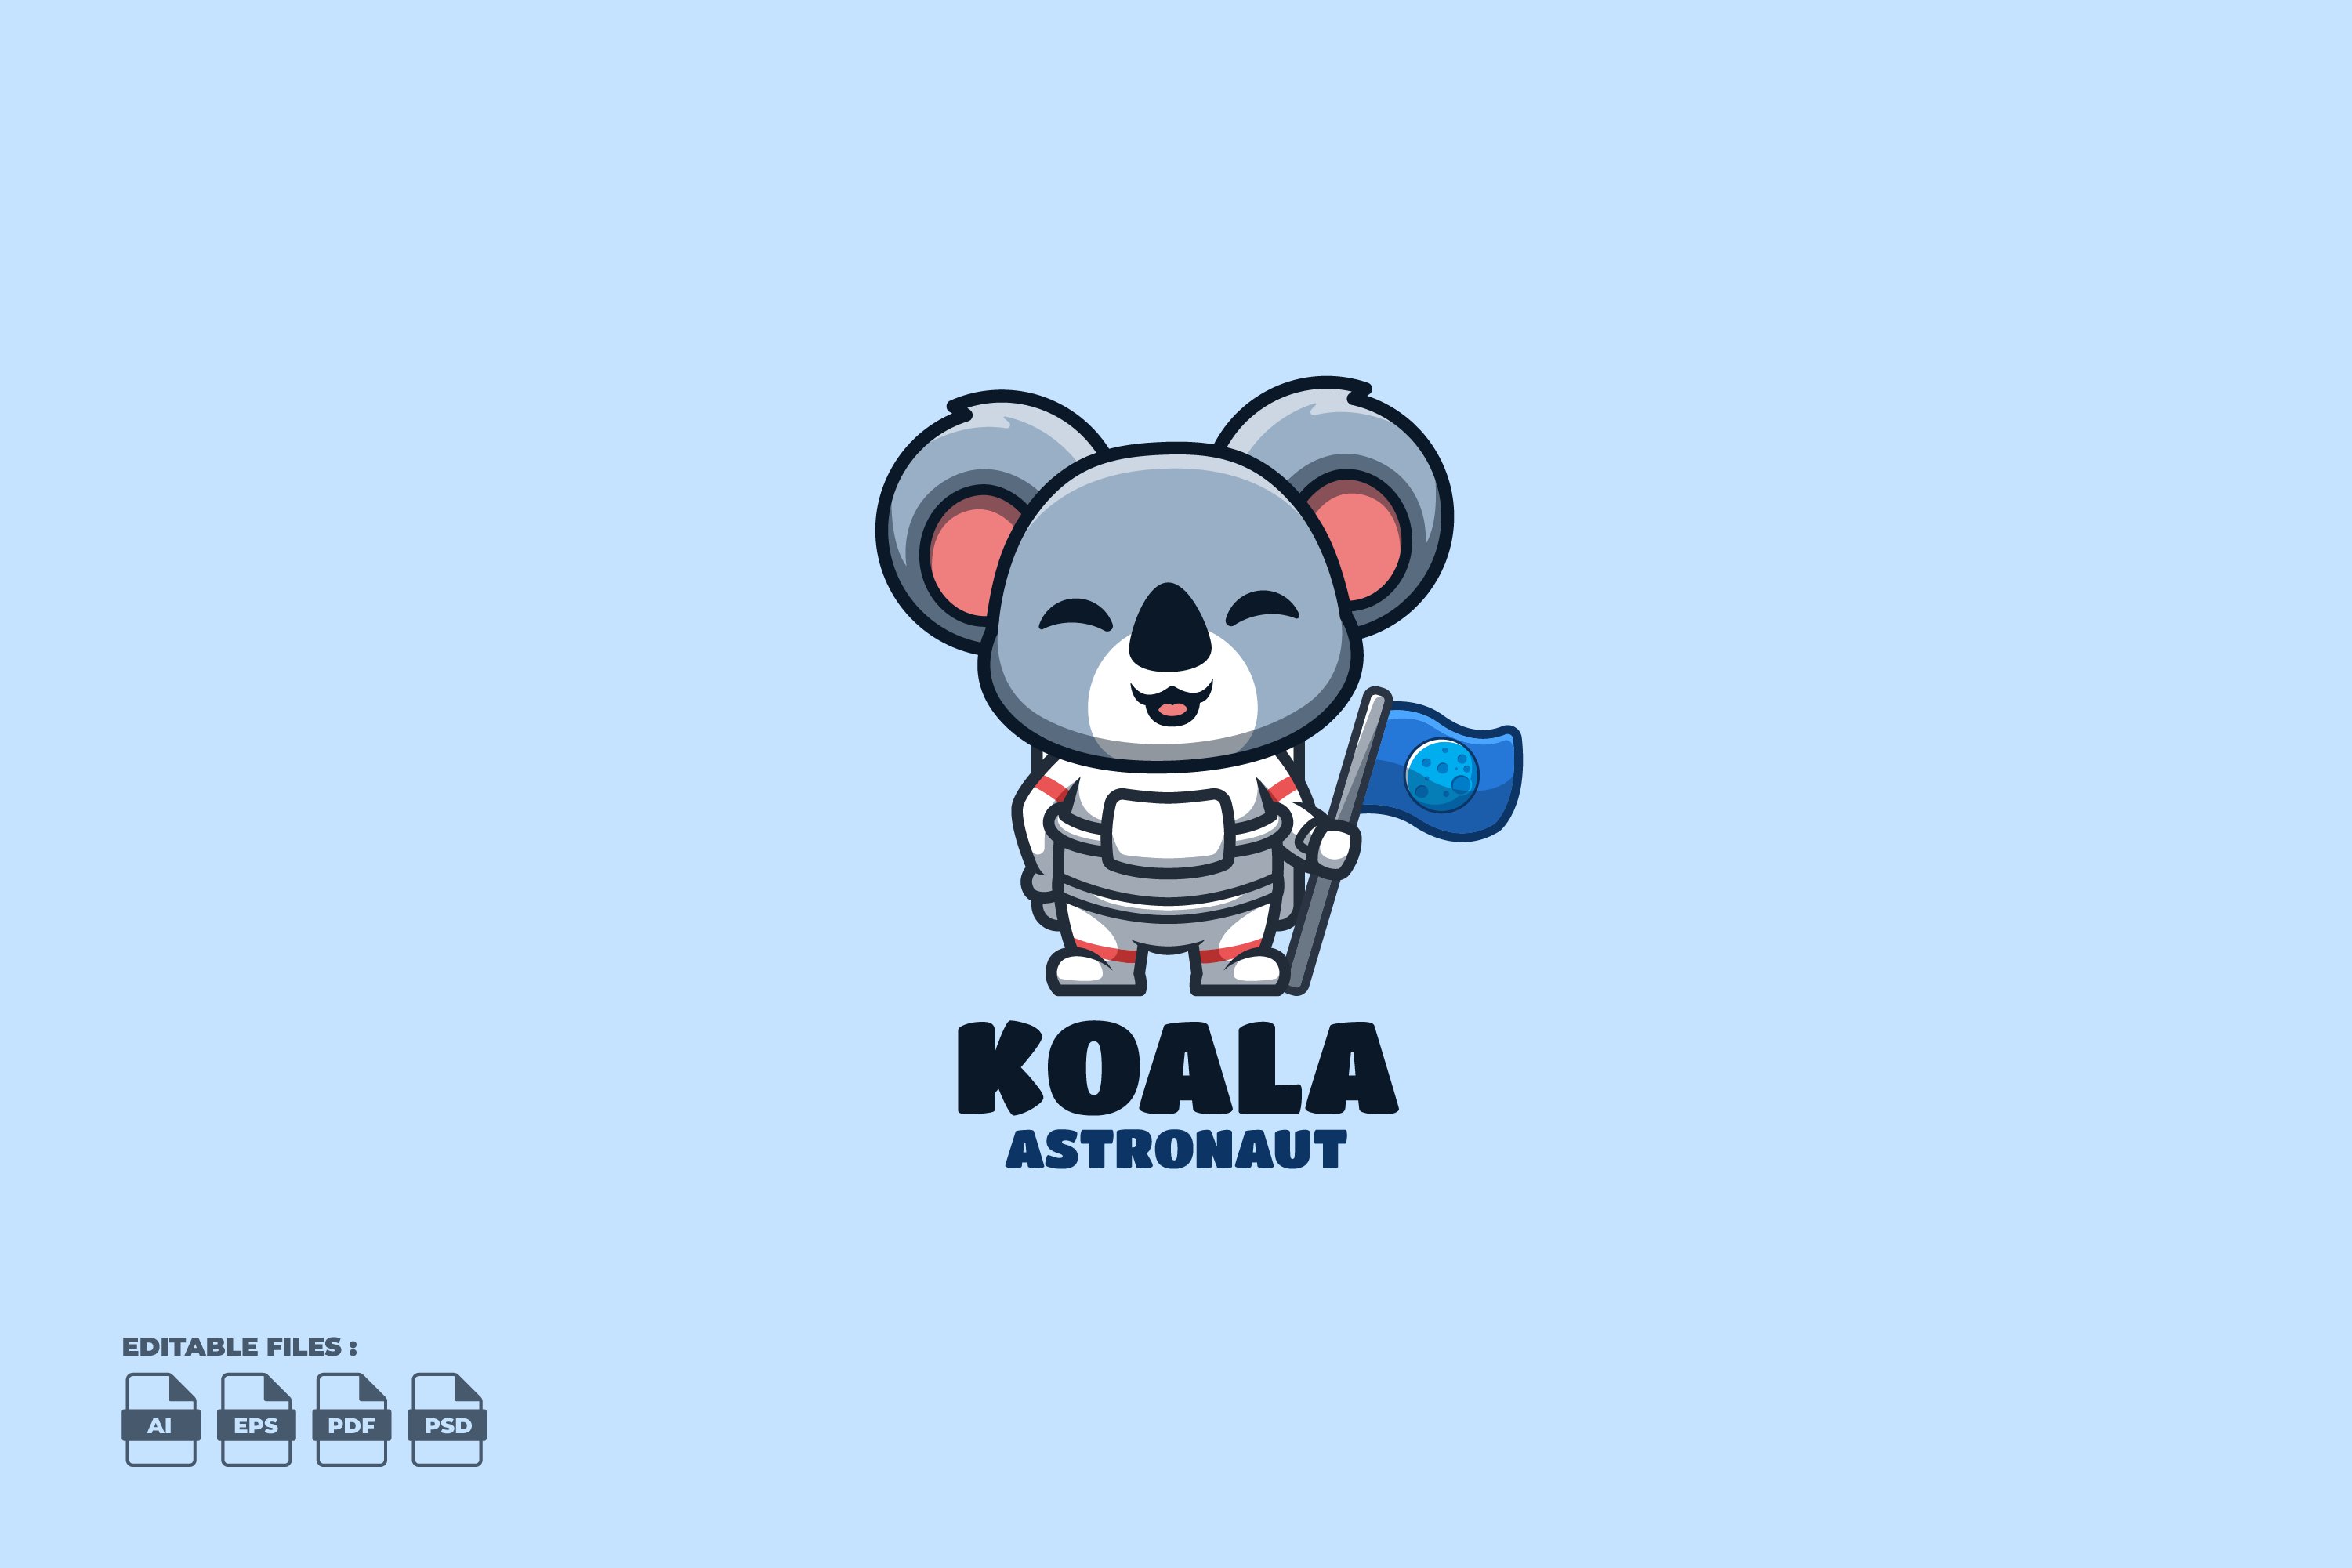 Astronaut Koala Cute Mascot Logo cover image.